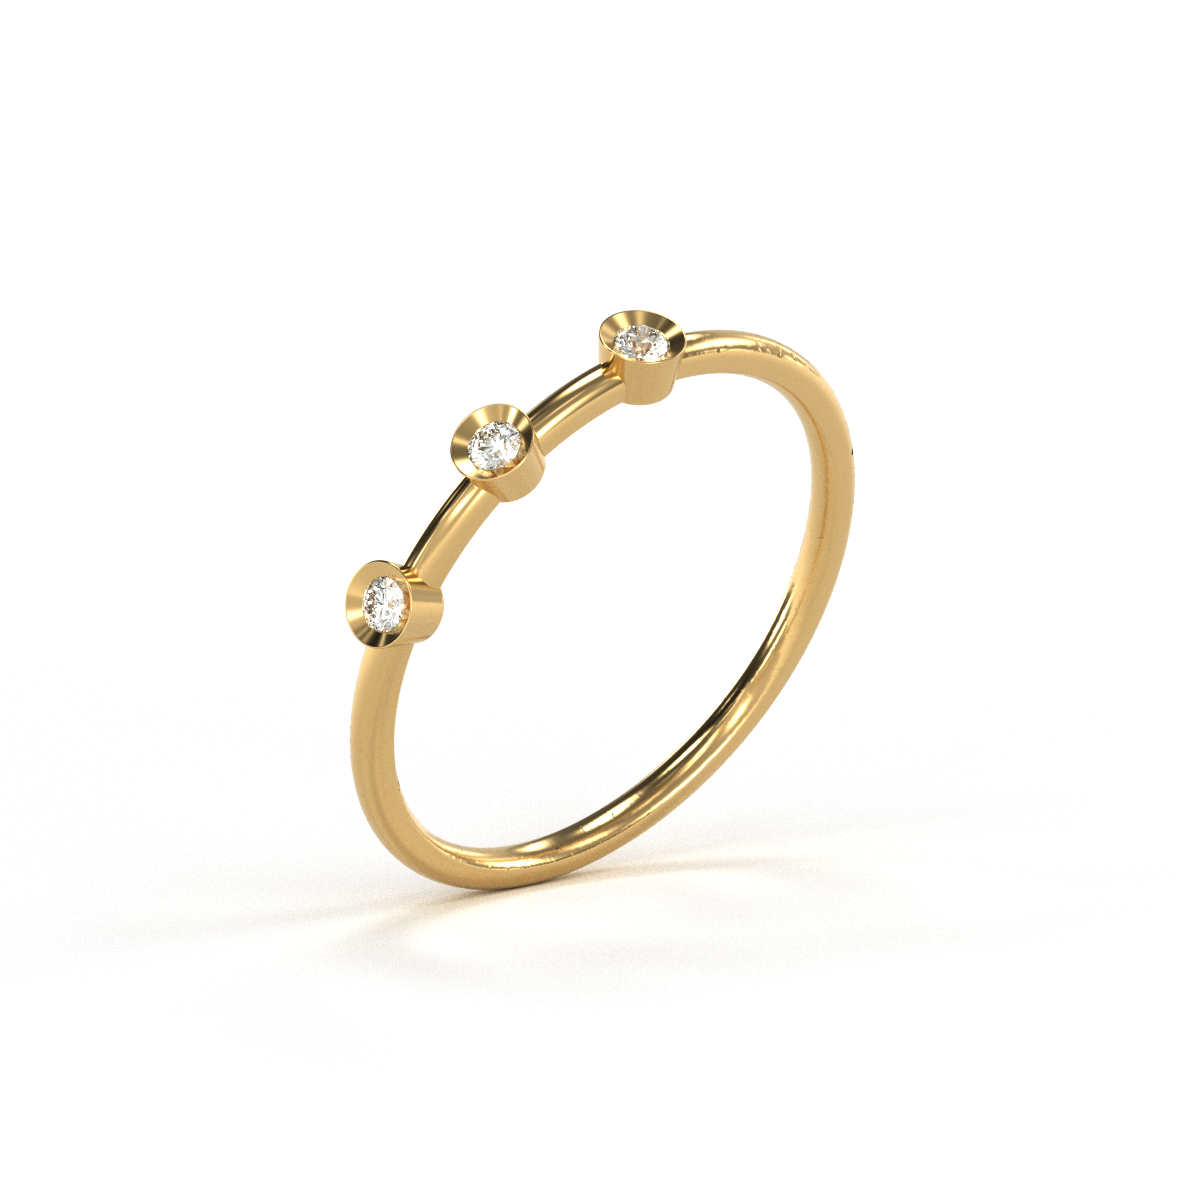 Lady's 14 Karat Yellow Gold Contemporary Diamond Fashion Ring